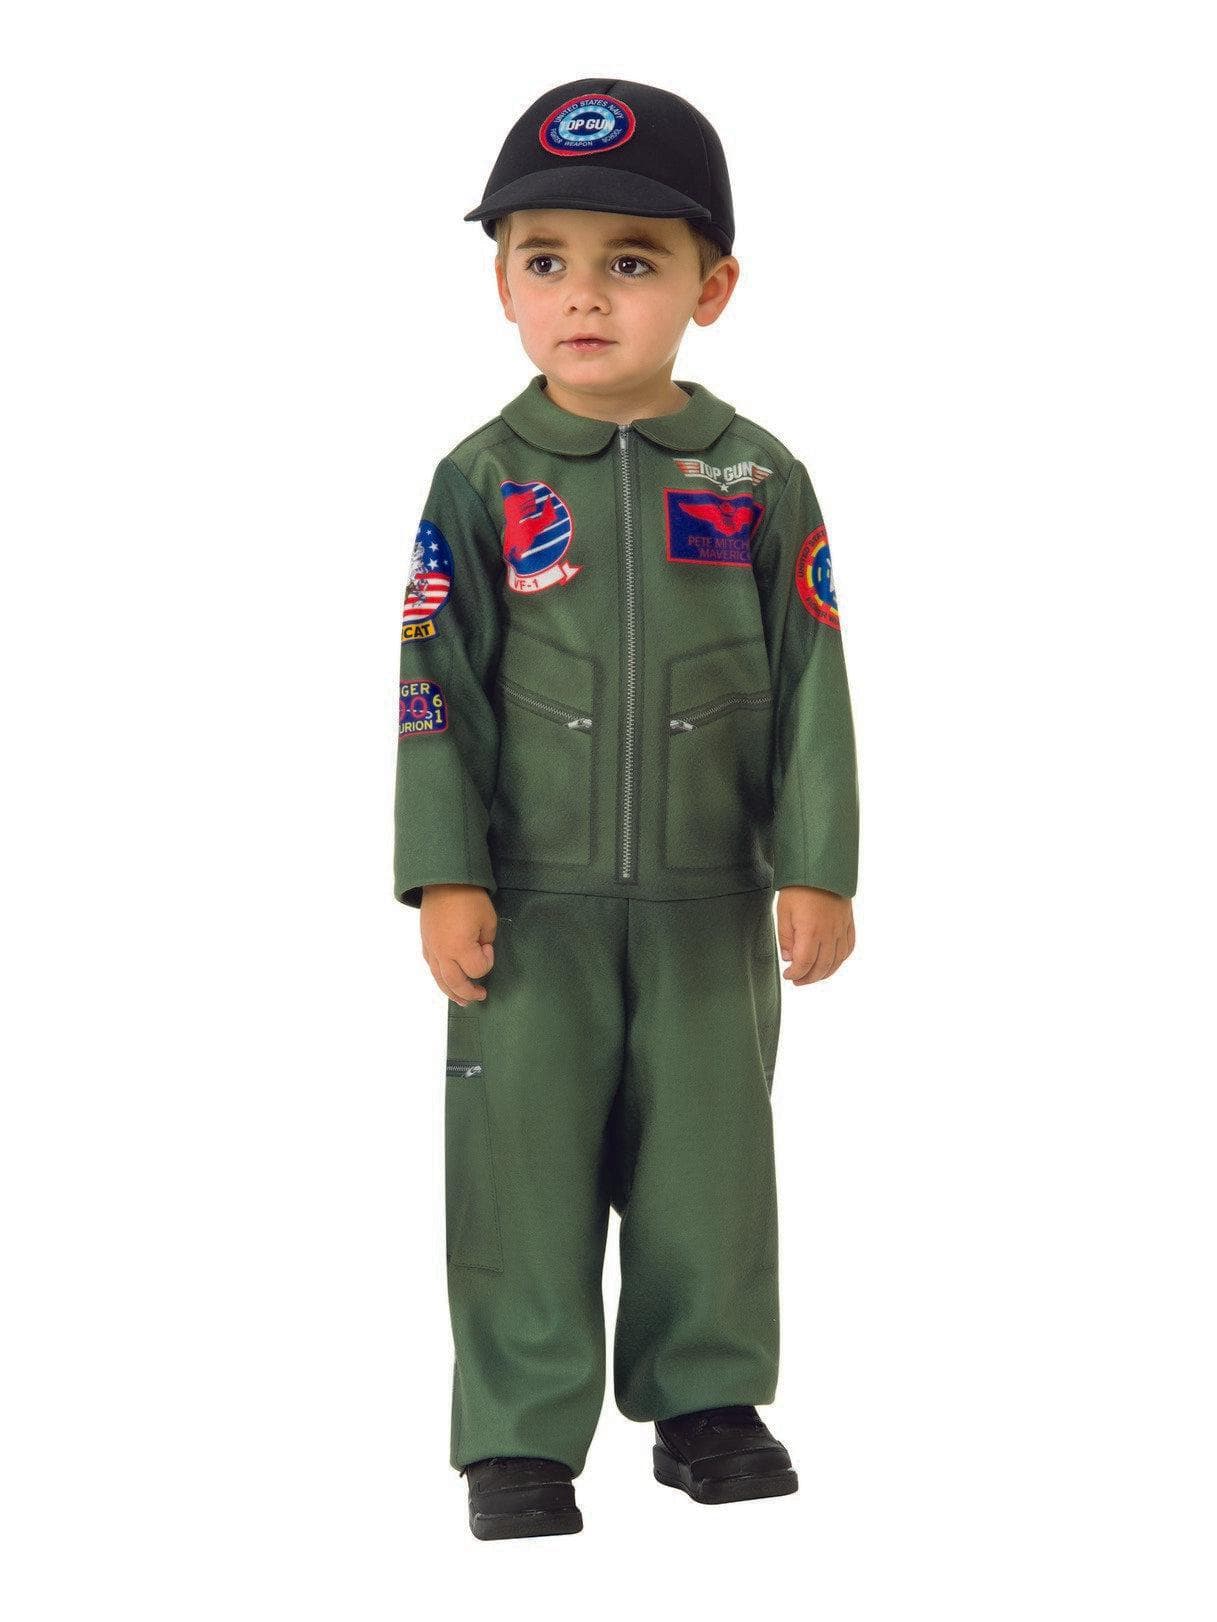 Baby/Toddler Top Gun Costume - costumes.com